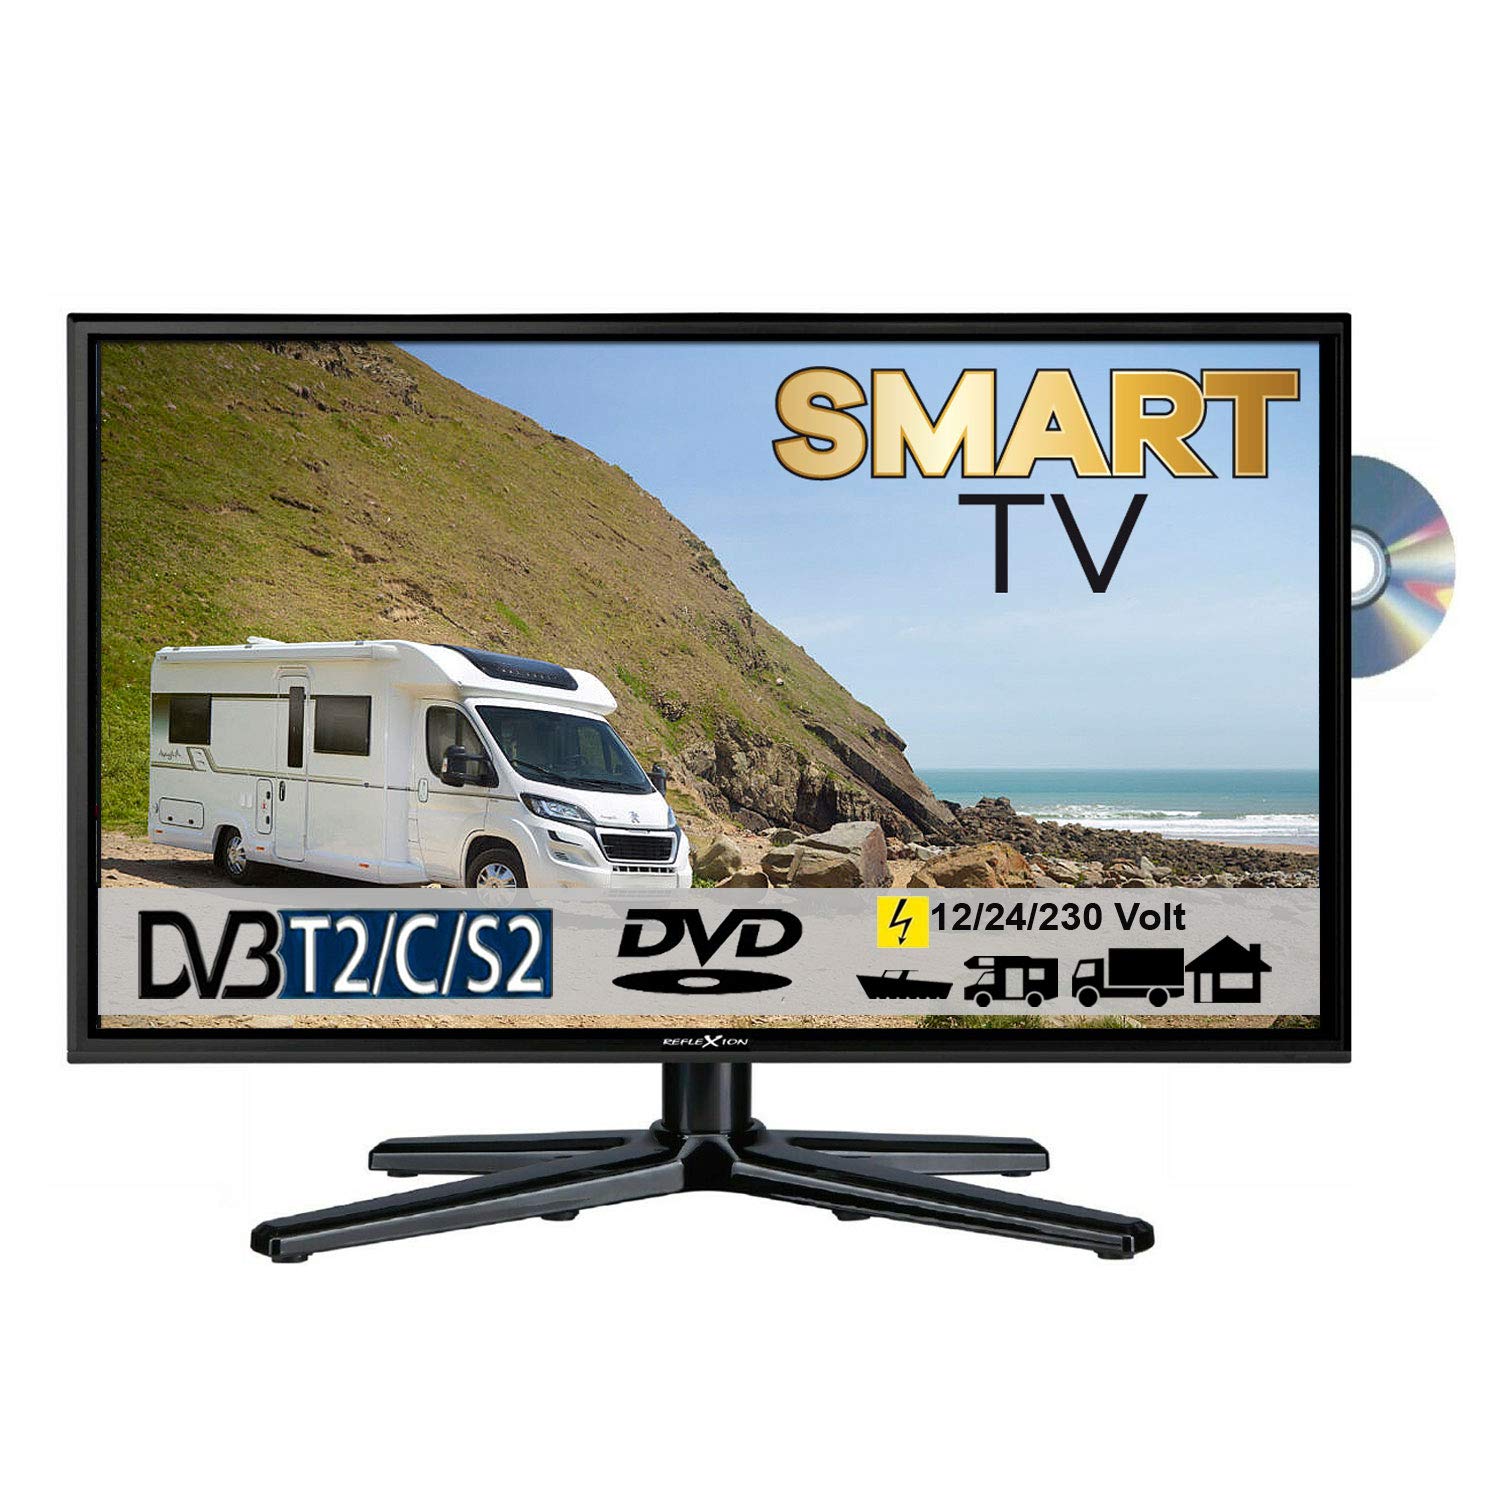 REFLEXION LDDW24i+ LED Smart TV mit DVD